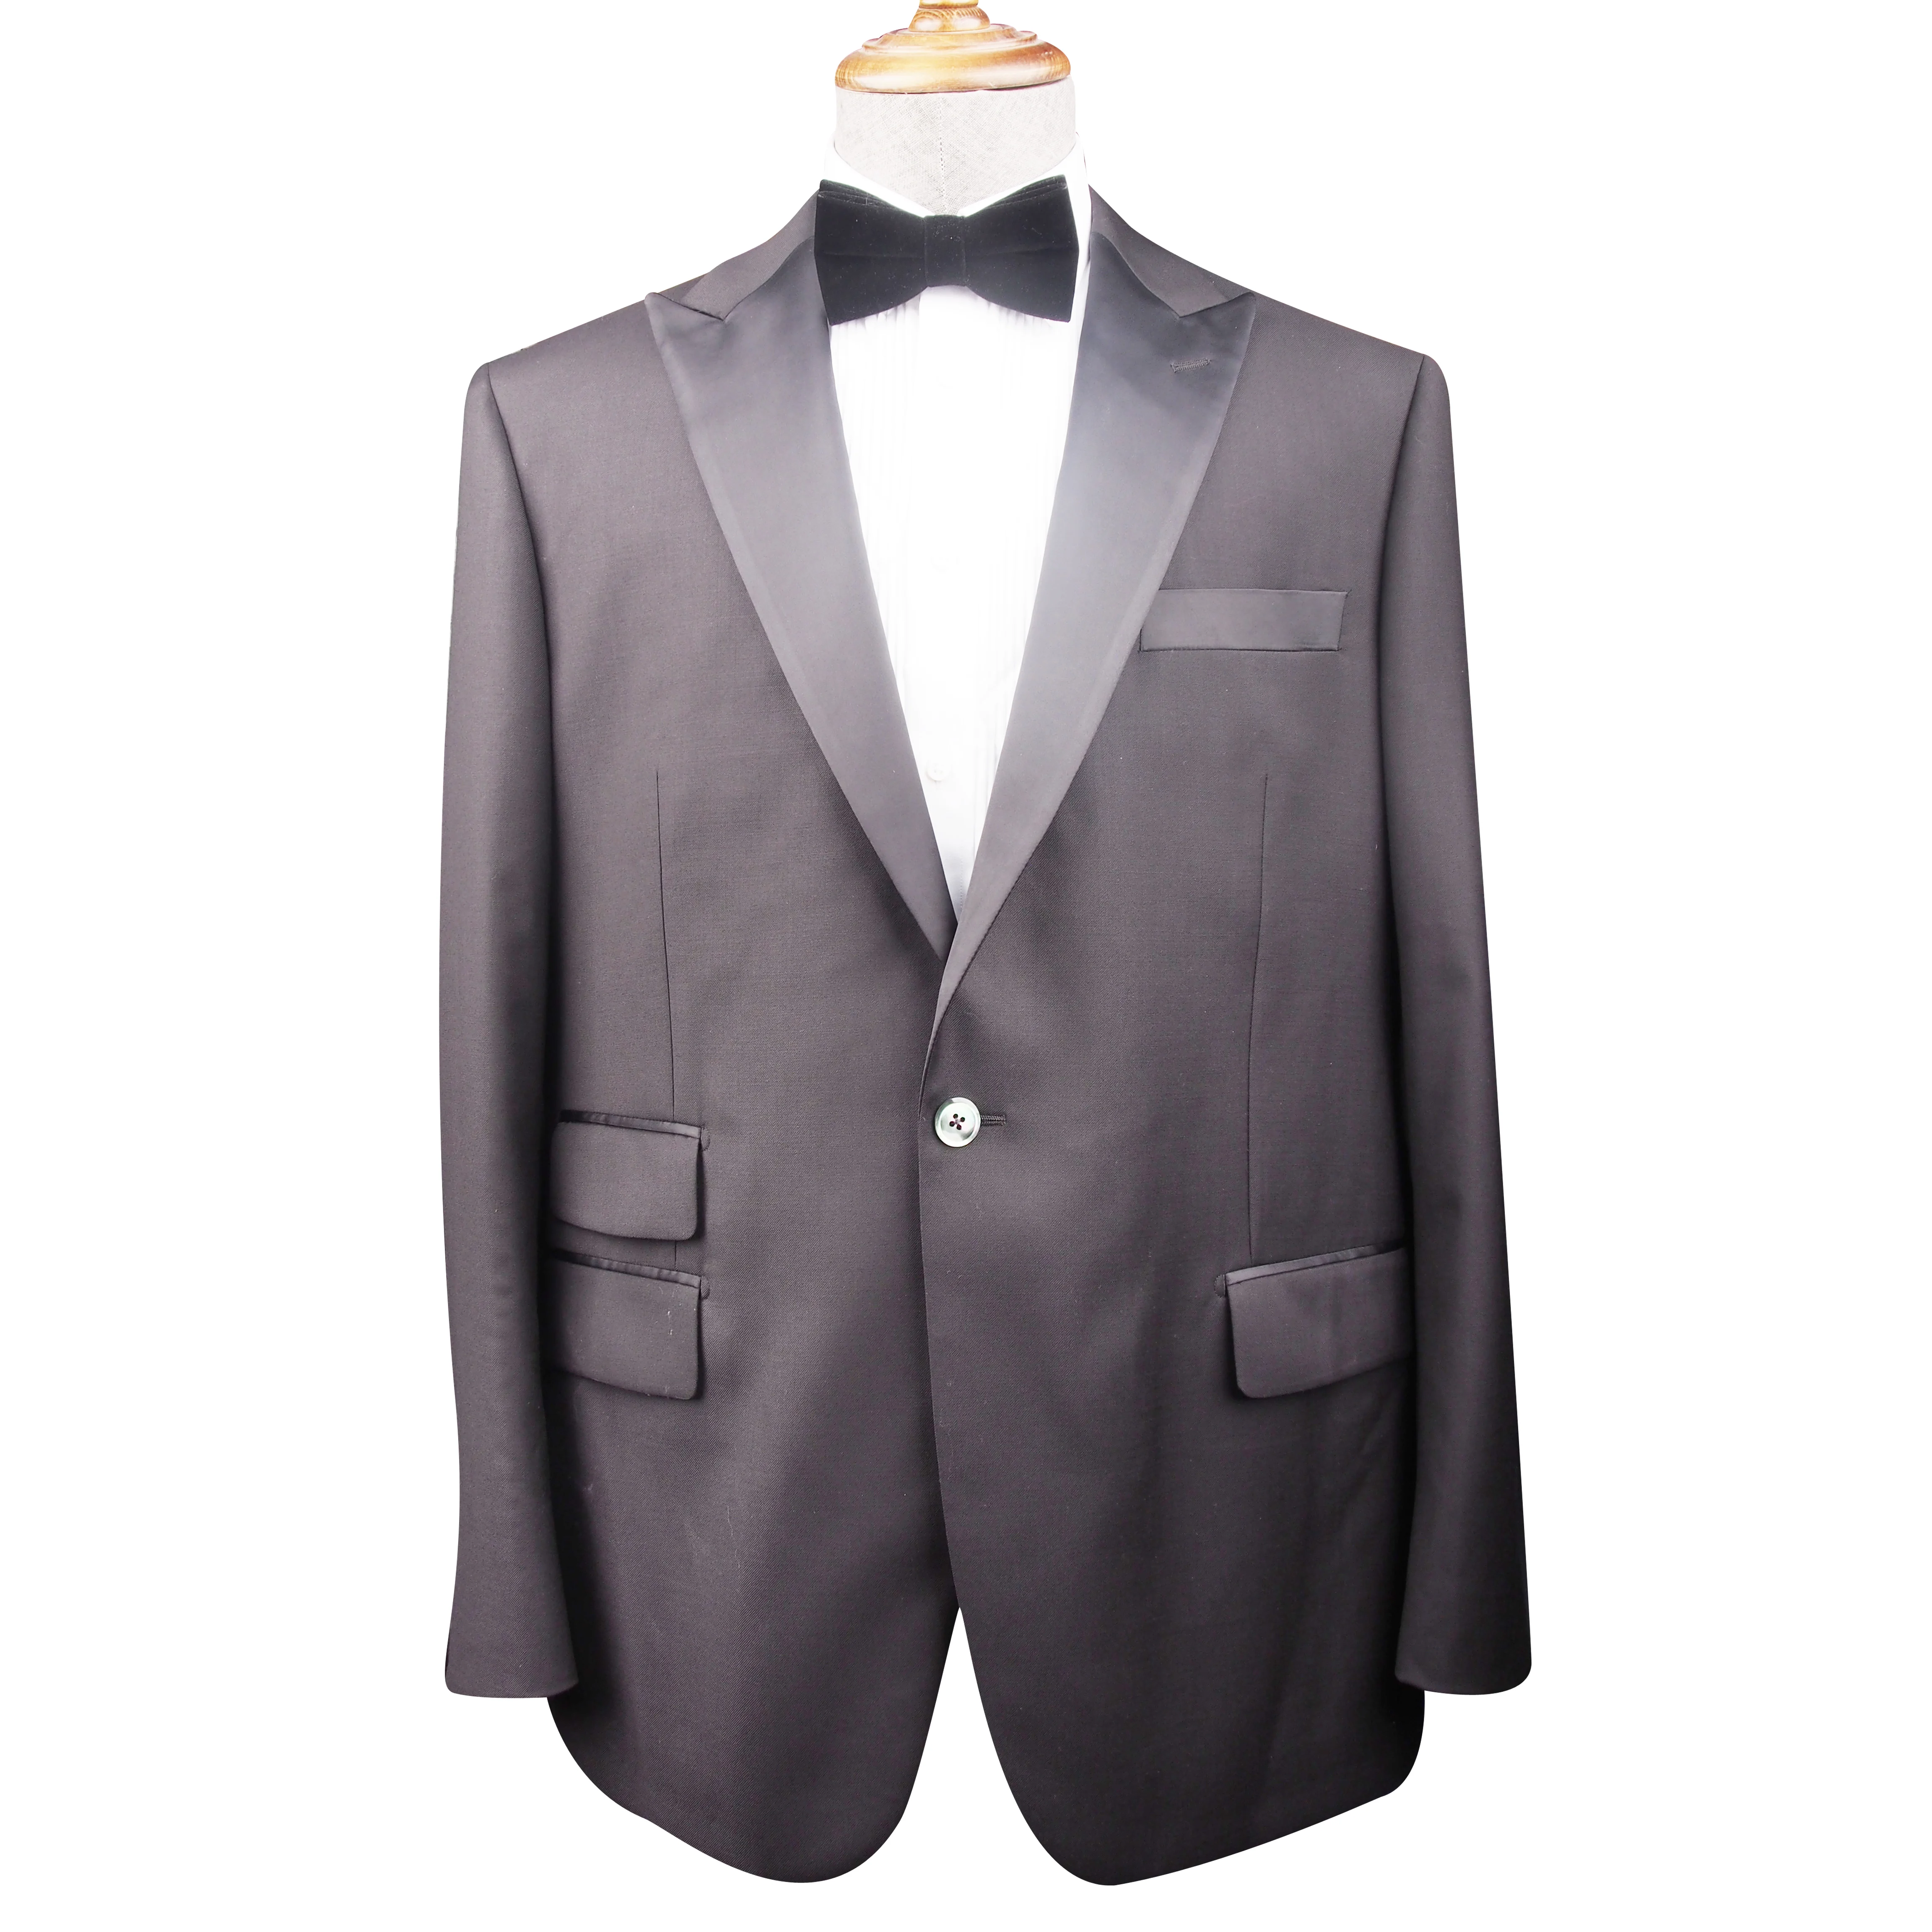 made in China wholesale 2 peças 100% Wool  Tuxedo Suit modern men's suit